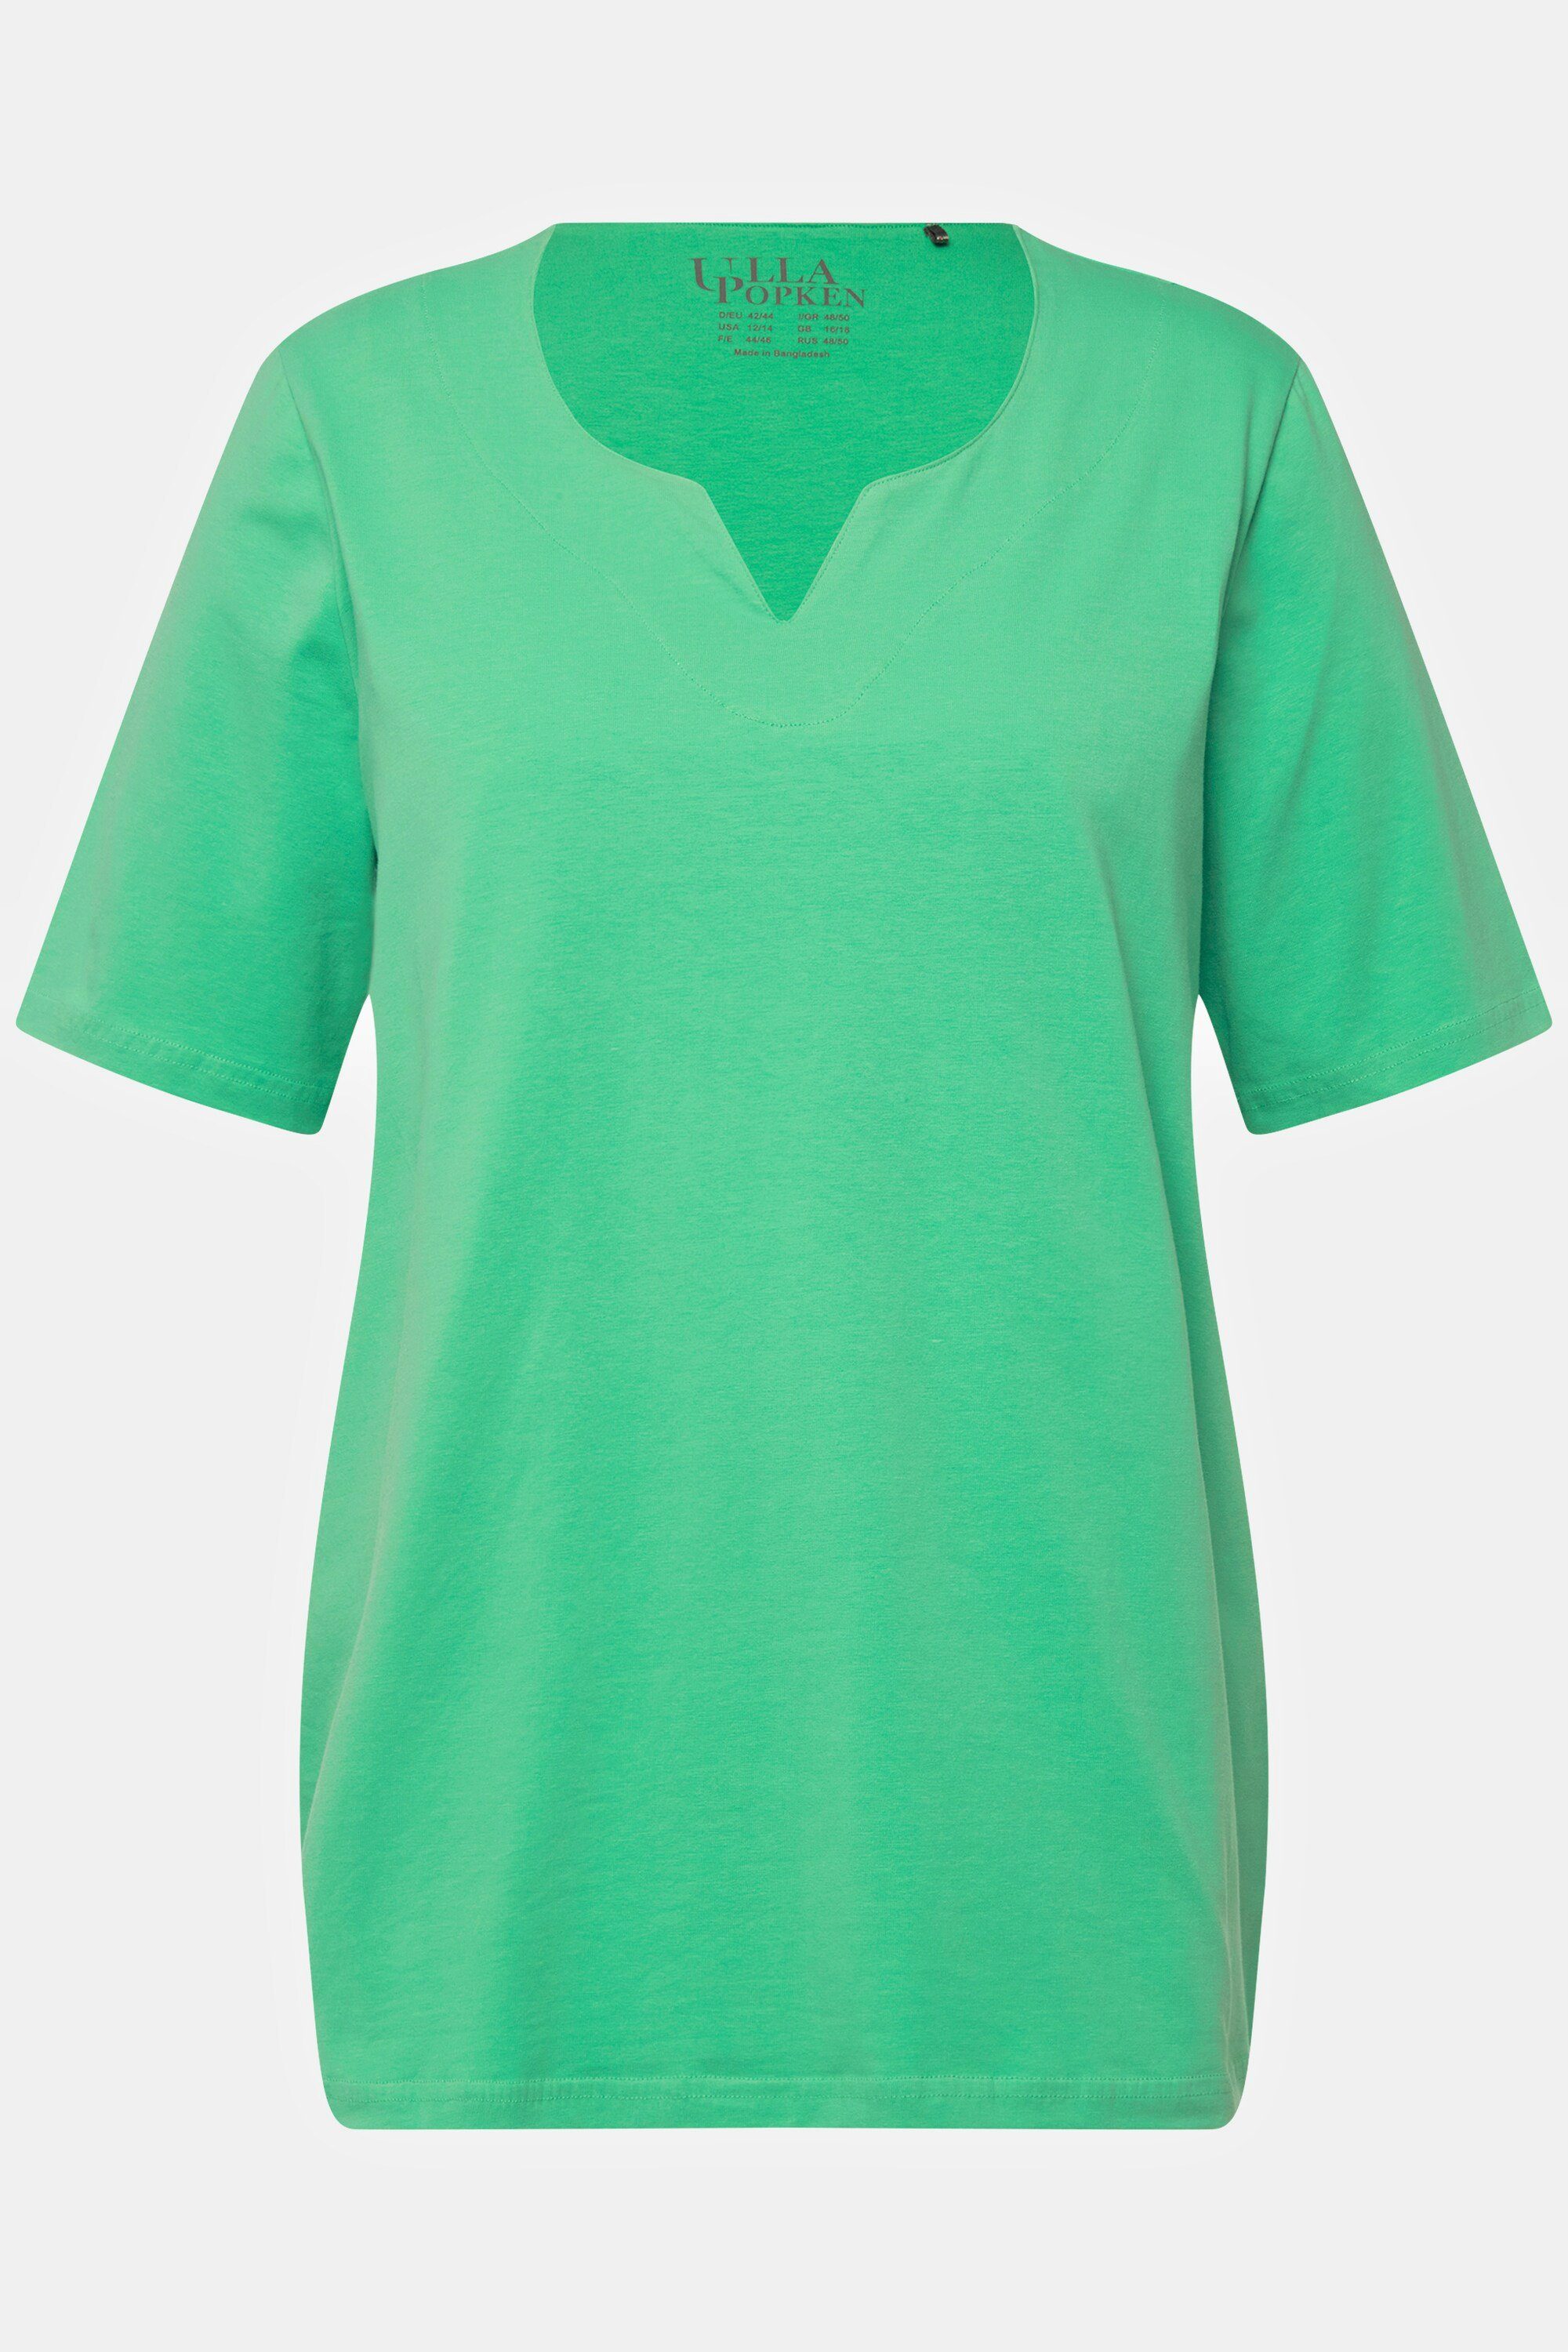 A-Linie Popken Ulla T-Shirt Rundhalsshirt Tunika-Ausschnitt Halbarm frühlingsgrün